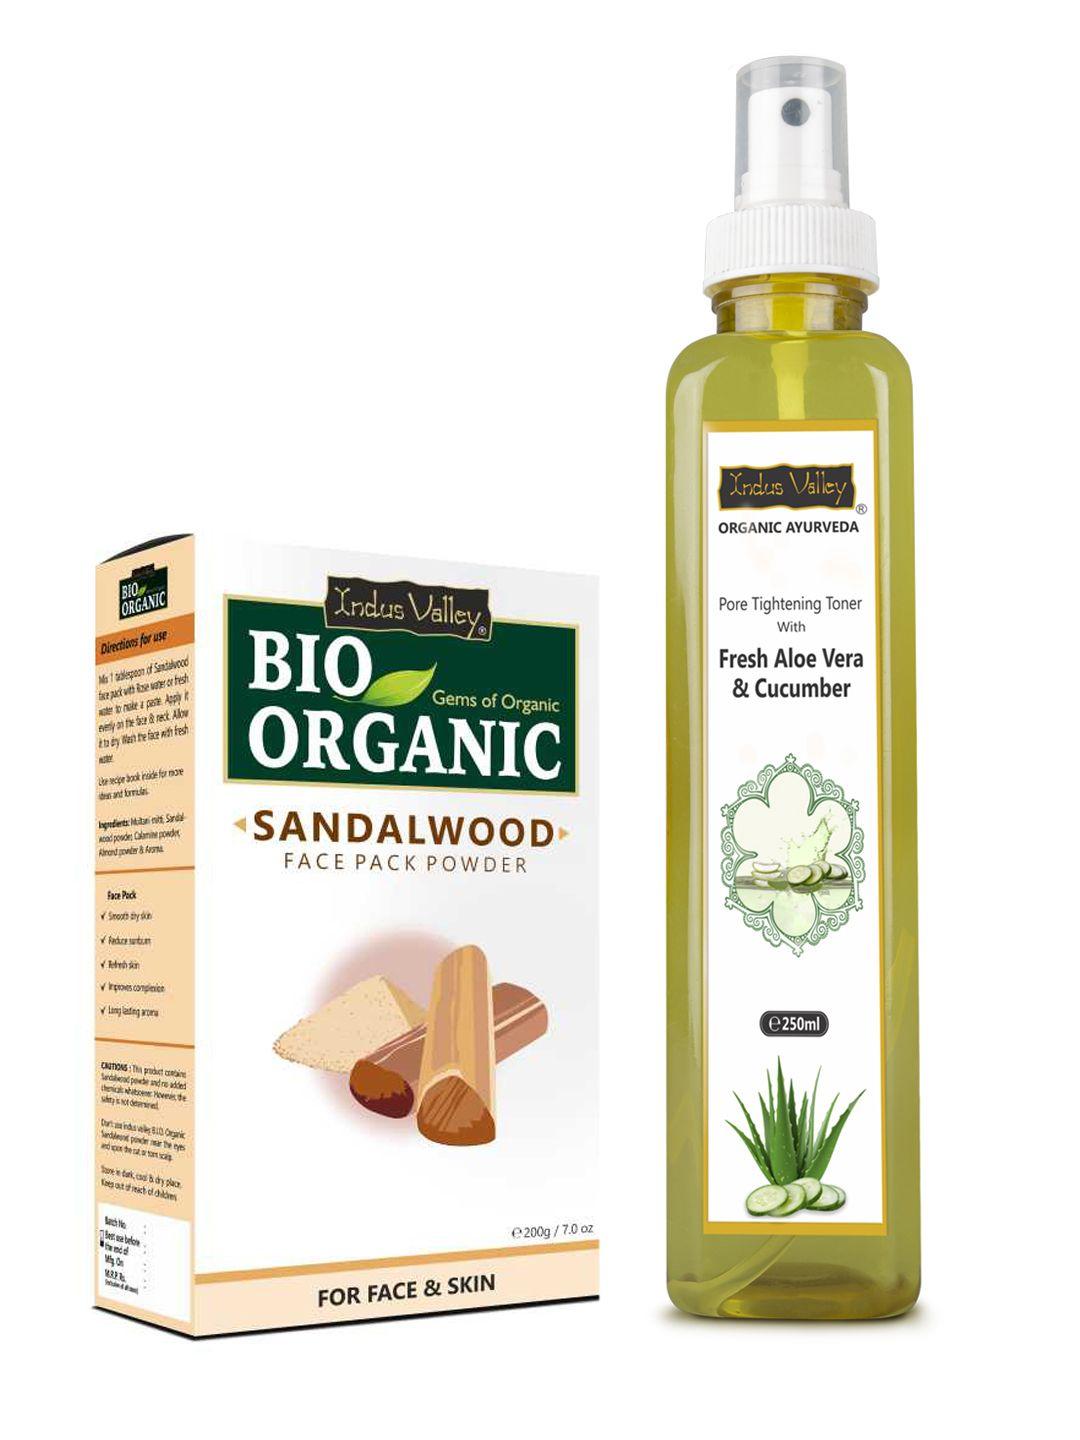 indus valley bio organic sandalwood face pack powder & fresh aloe vera & cucumber toner